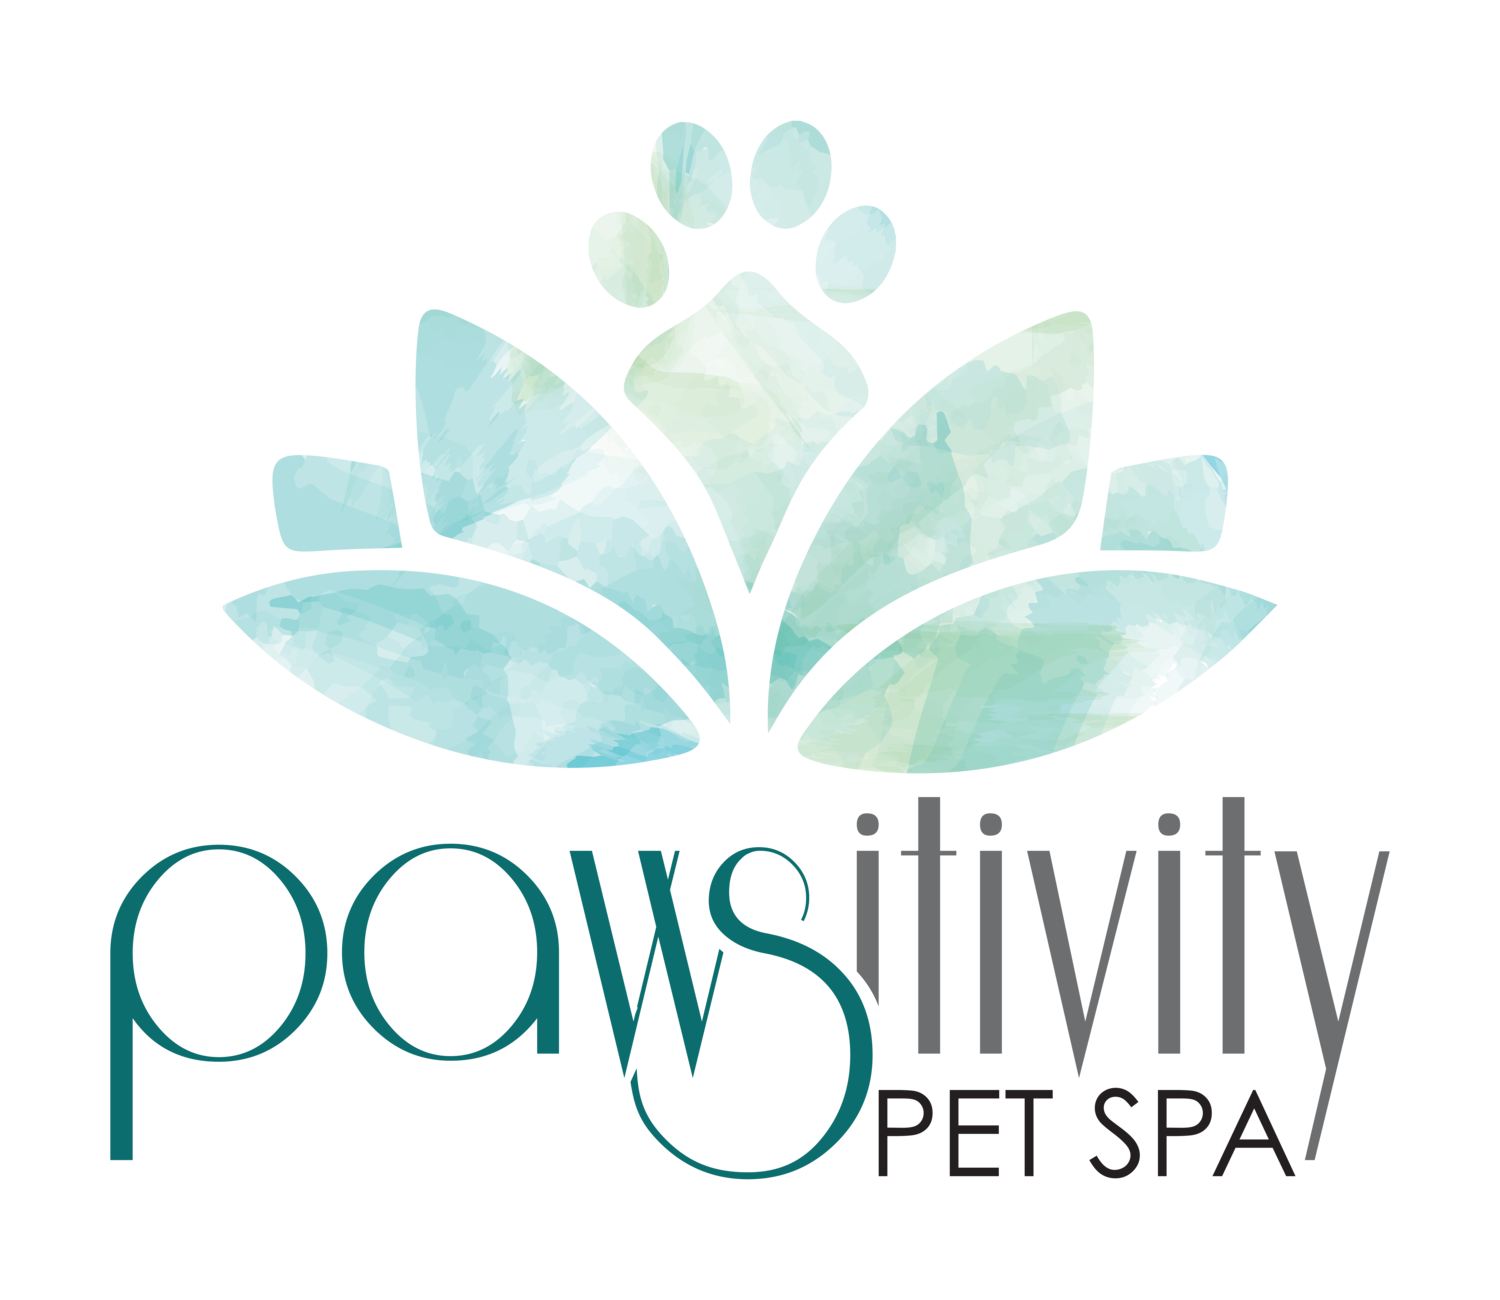 Pawsitivity Pet Spa